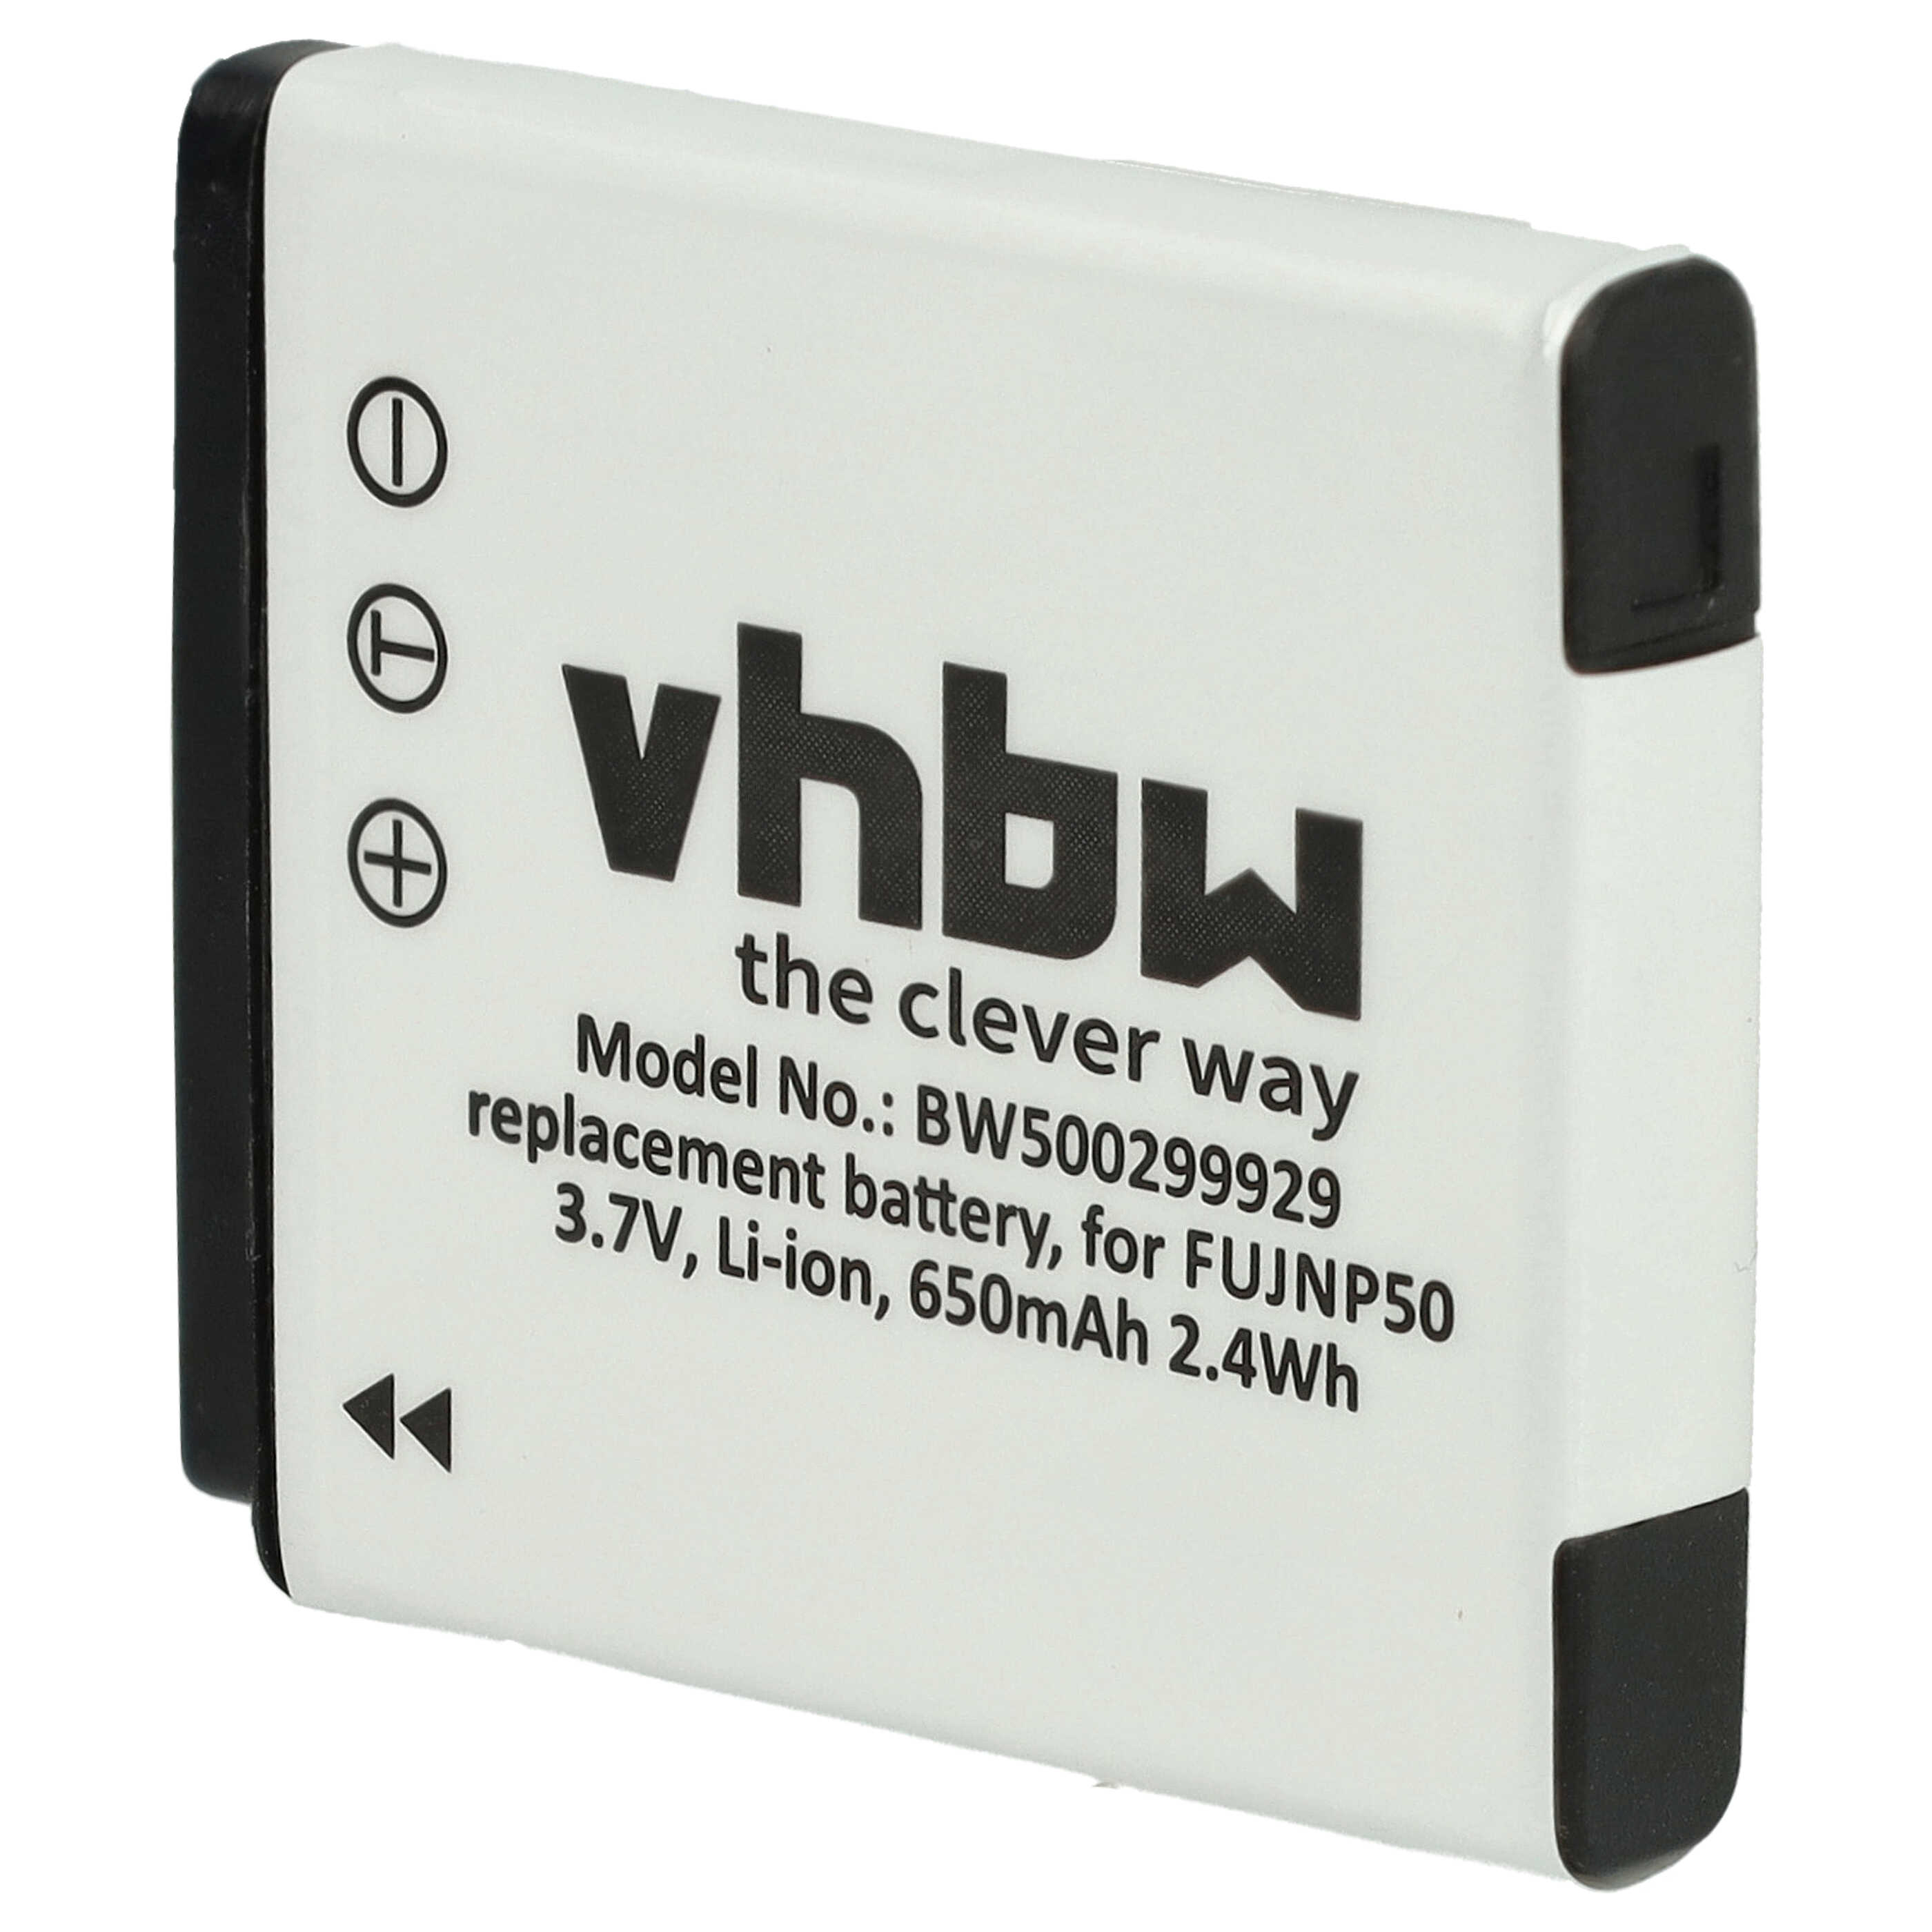 Batterie remplace Fuji / Fujifilm NP-50, NP-50A pour appareil photo - 650mAh 3,6V Li-ion